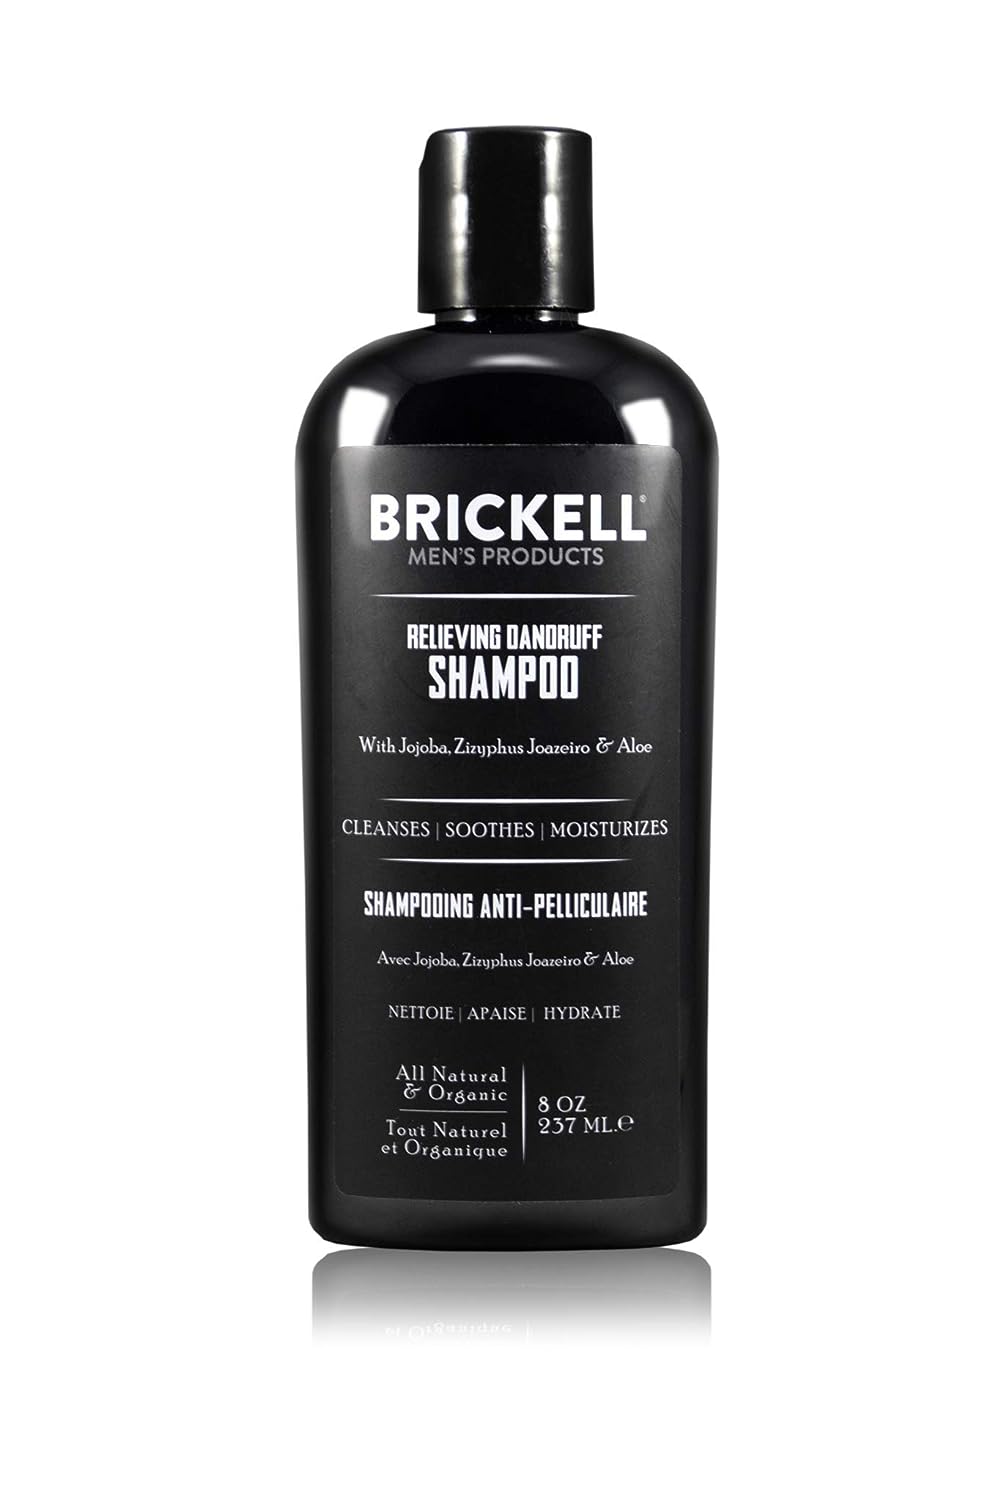 Brickell Men's Relieving Dandruff Shampoo For Men, [...]